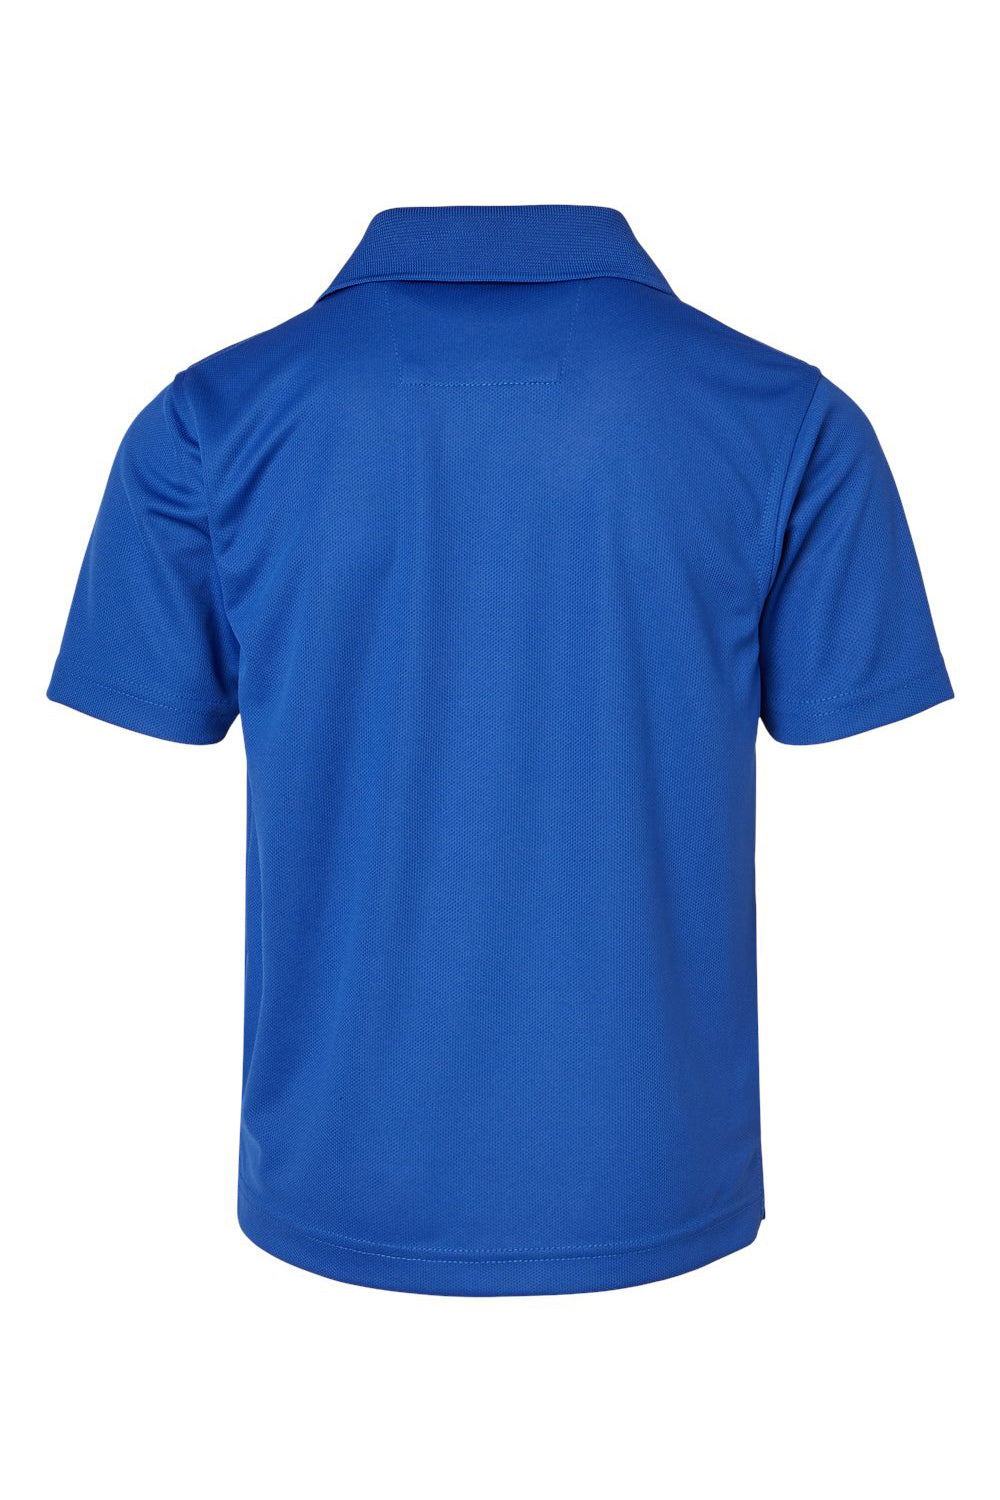 Paragon 108Y Youth Saratoga Performance Mini Mesh Short Sleeve Polo Shirt Royal Blue Flat Back